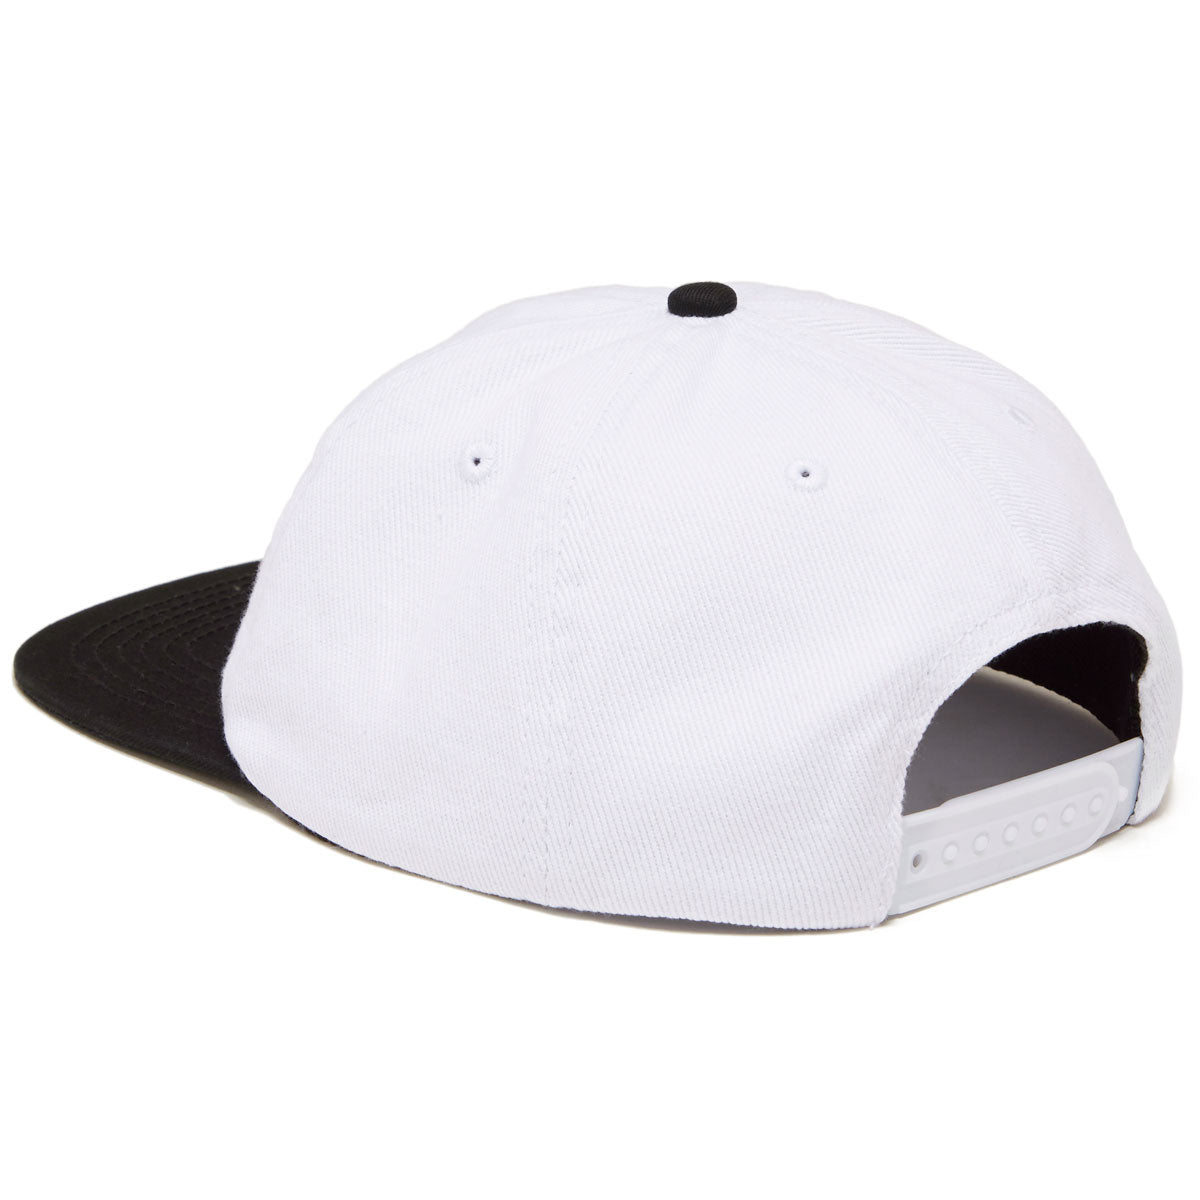 CCS 96 Logo Denim Snapback Hat - White image 2